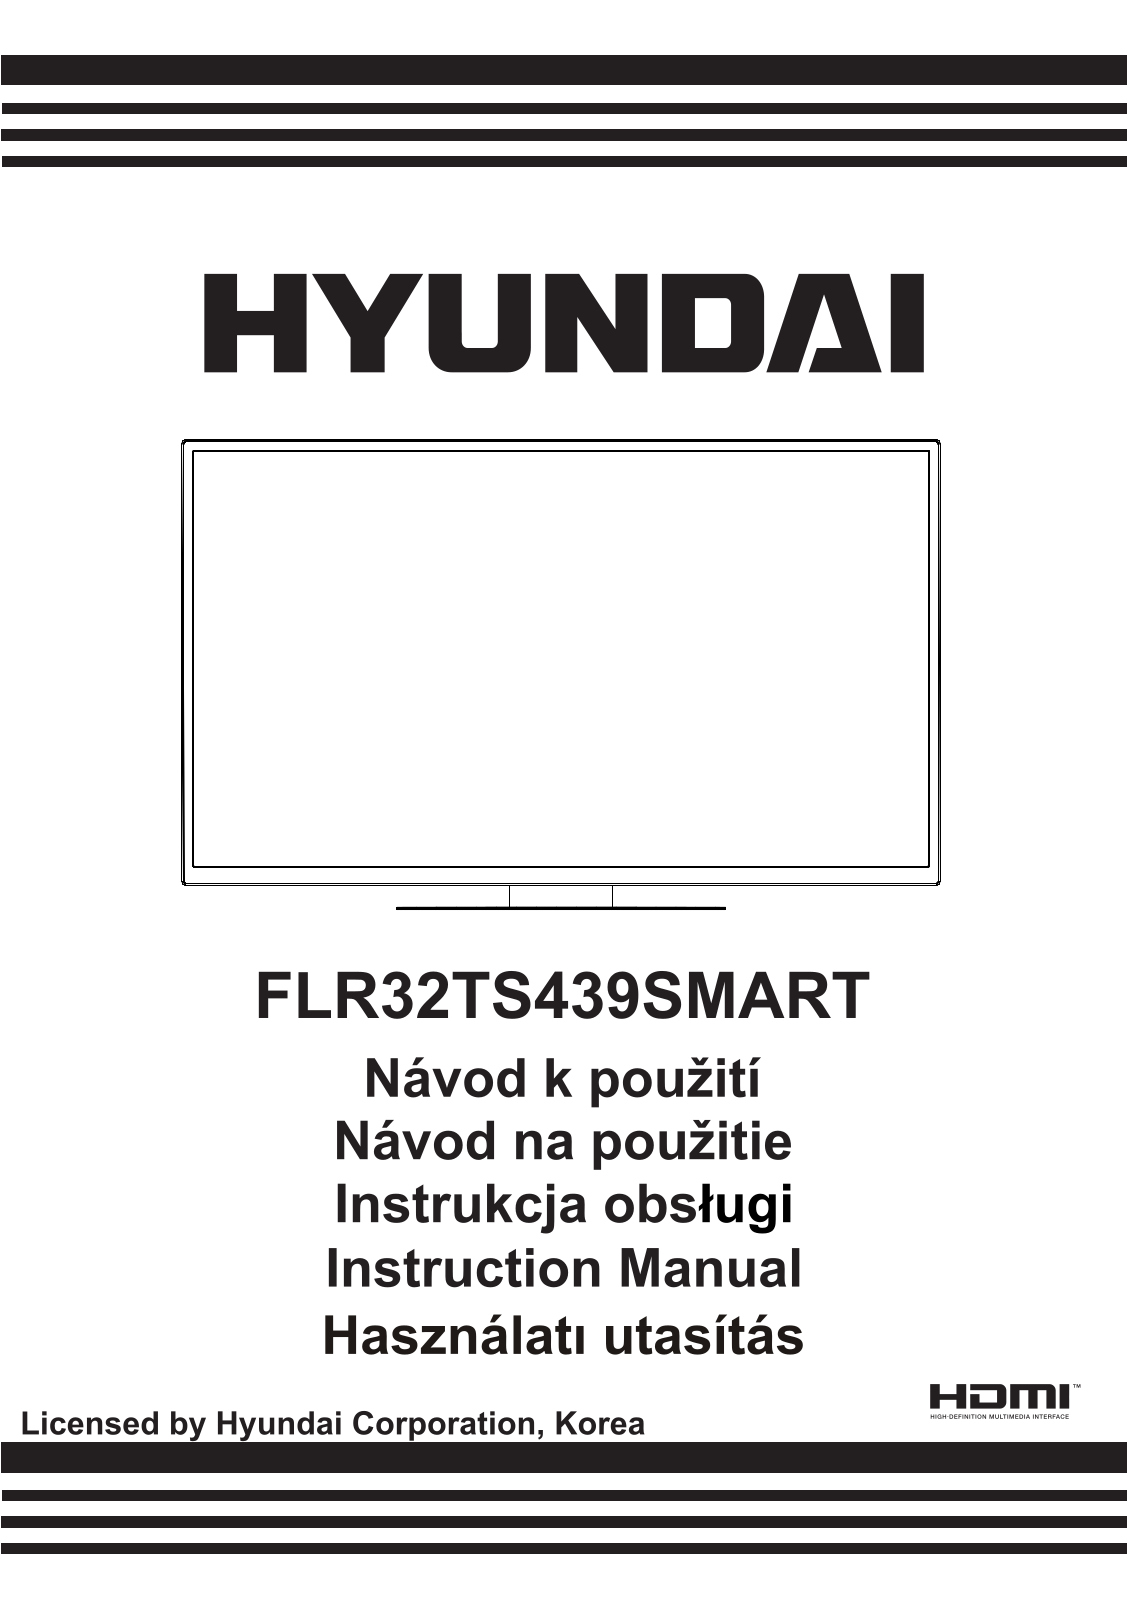 Hyundai FLR 32TS439 SMART User Manual